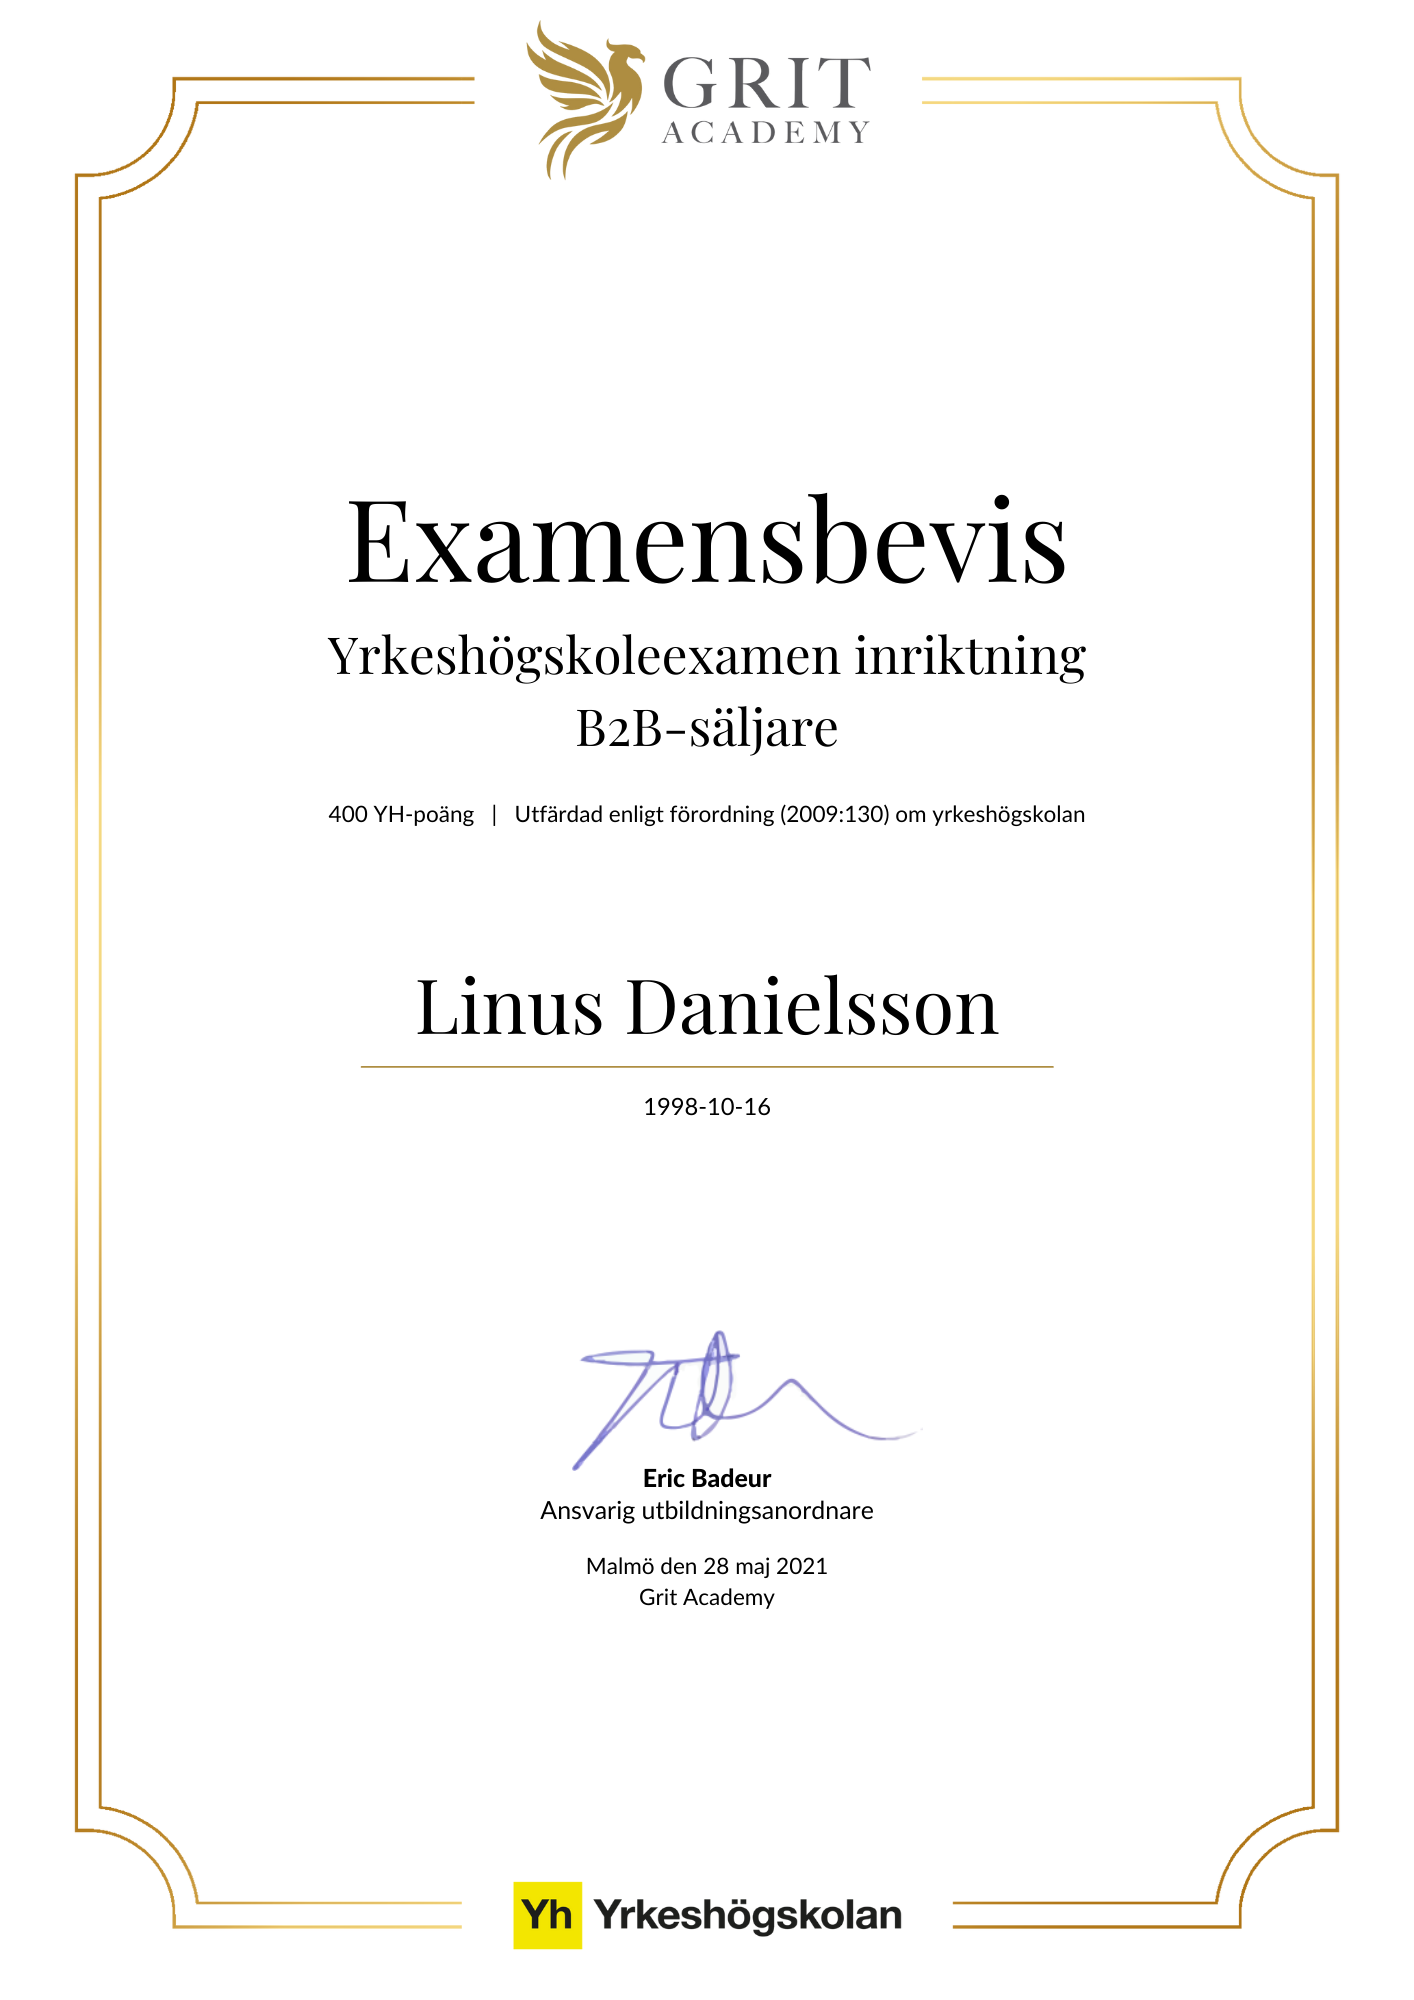 Examensbevis Linus Danielsson - 1